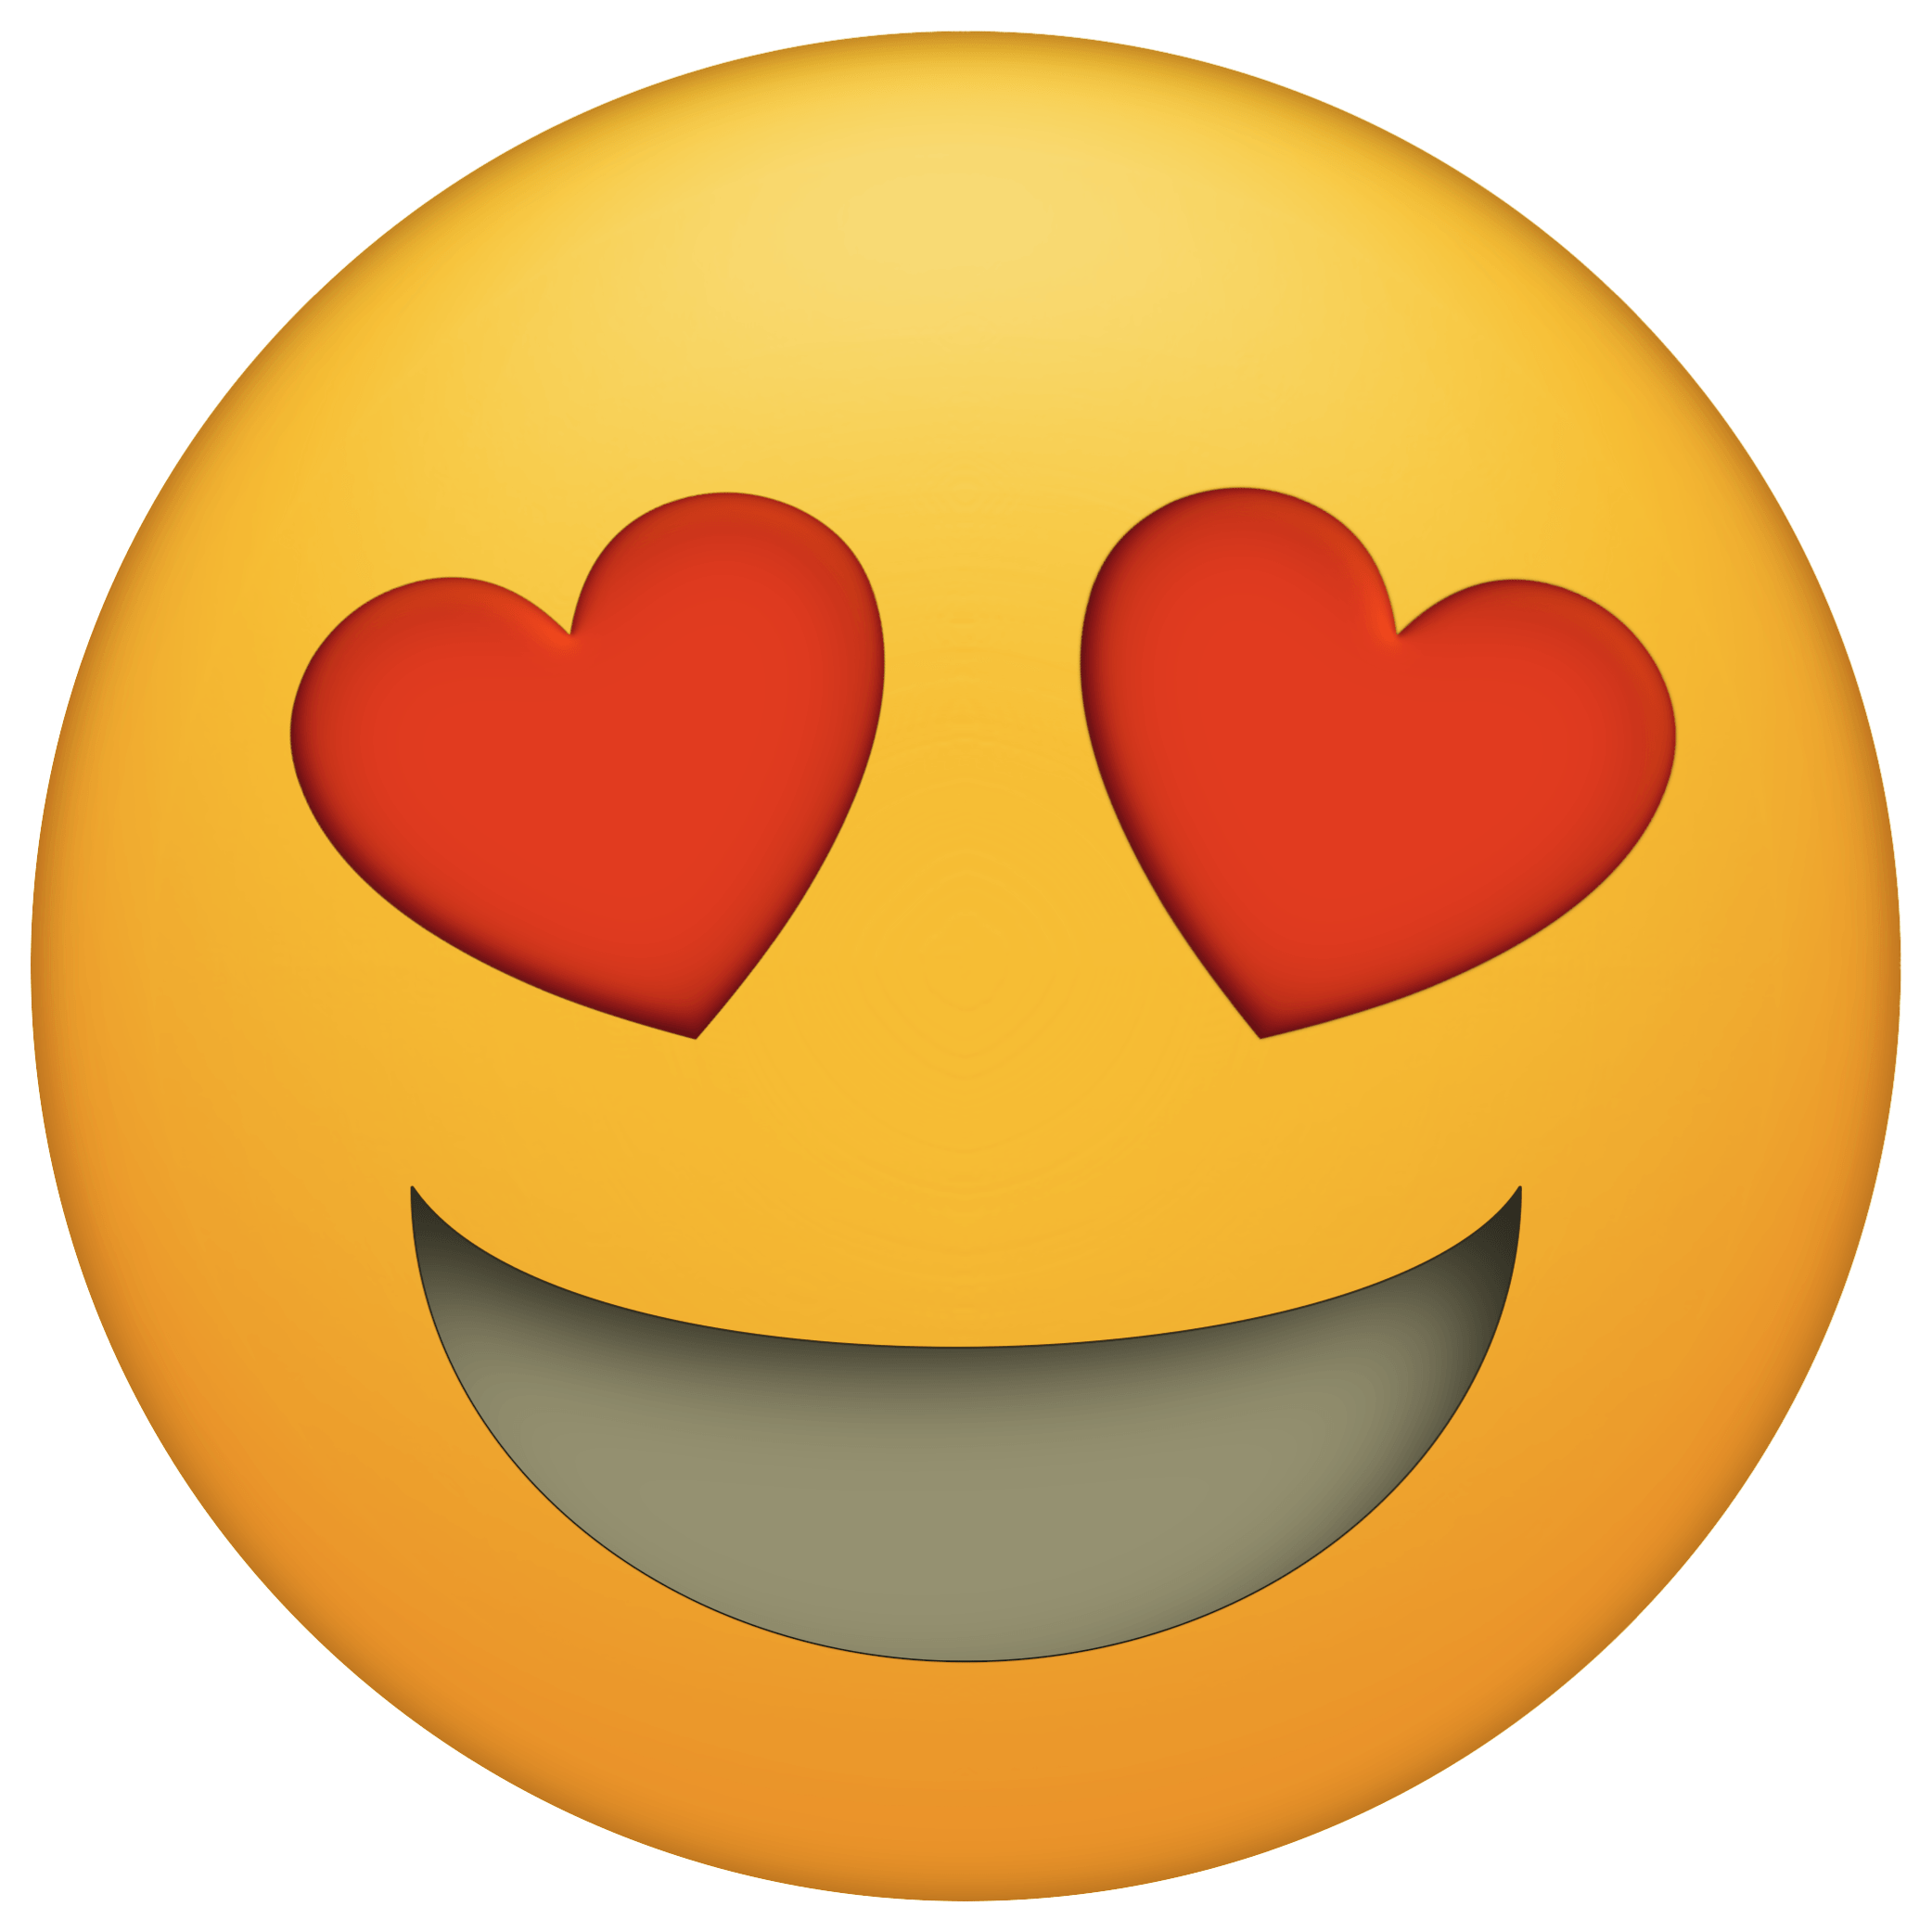 Twitter Emoji Heart PNG صورة عالية الجودة